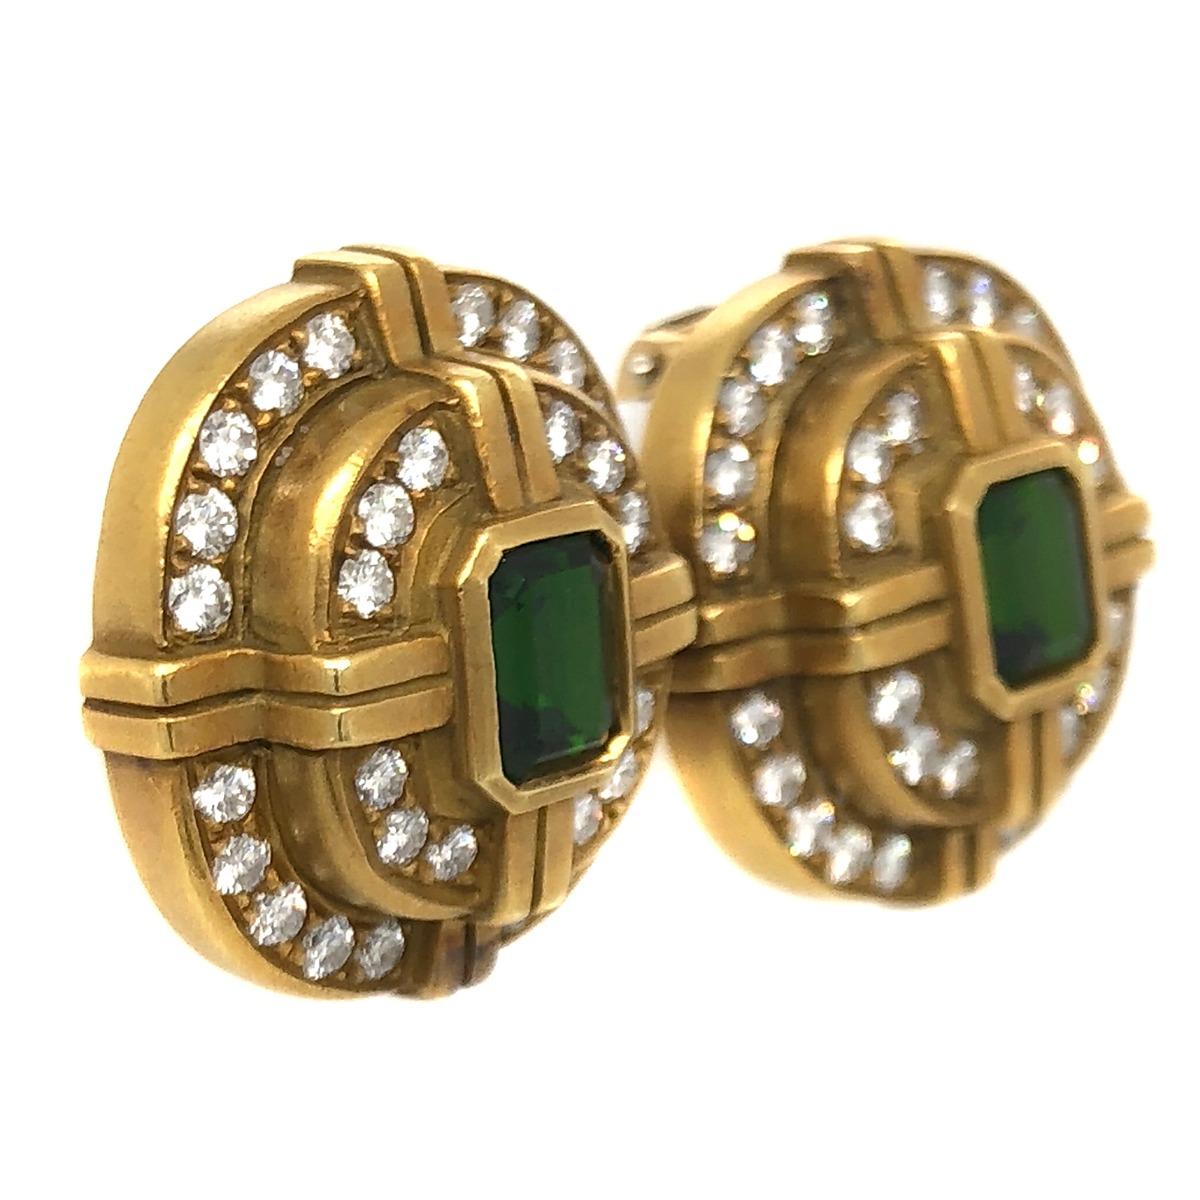 Metal: 18k Gold
Style: Ear Clip
Total Diamond Weight: 2.5 Ct
Diamond Color: D-E
Clarity: VS1-VS2
Stone: tourmaline
Cut: emerald